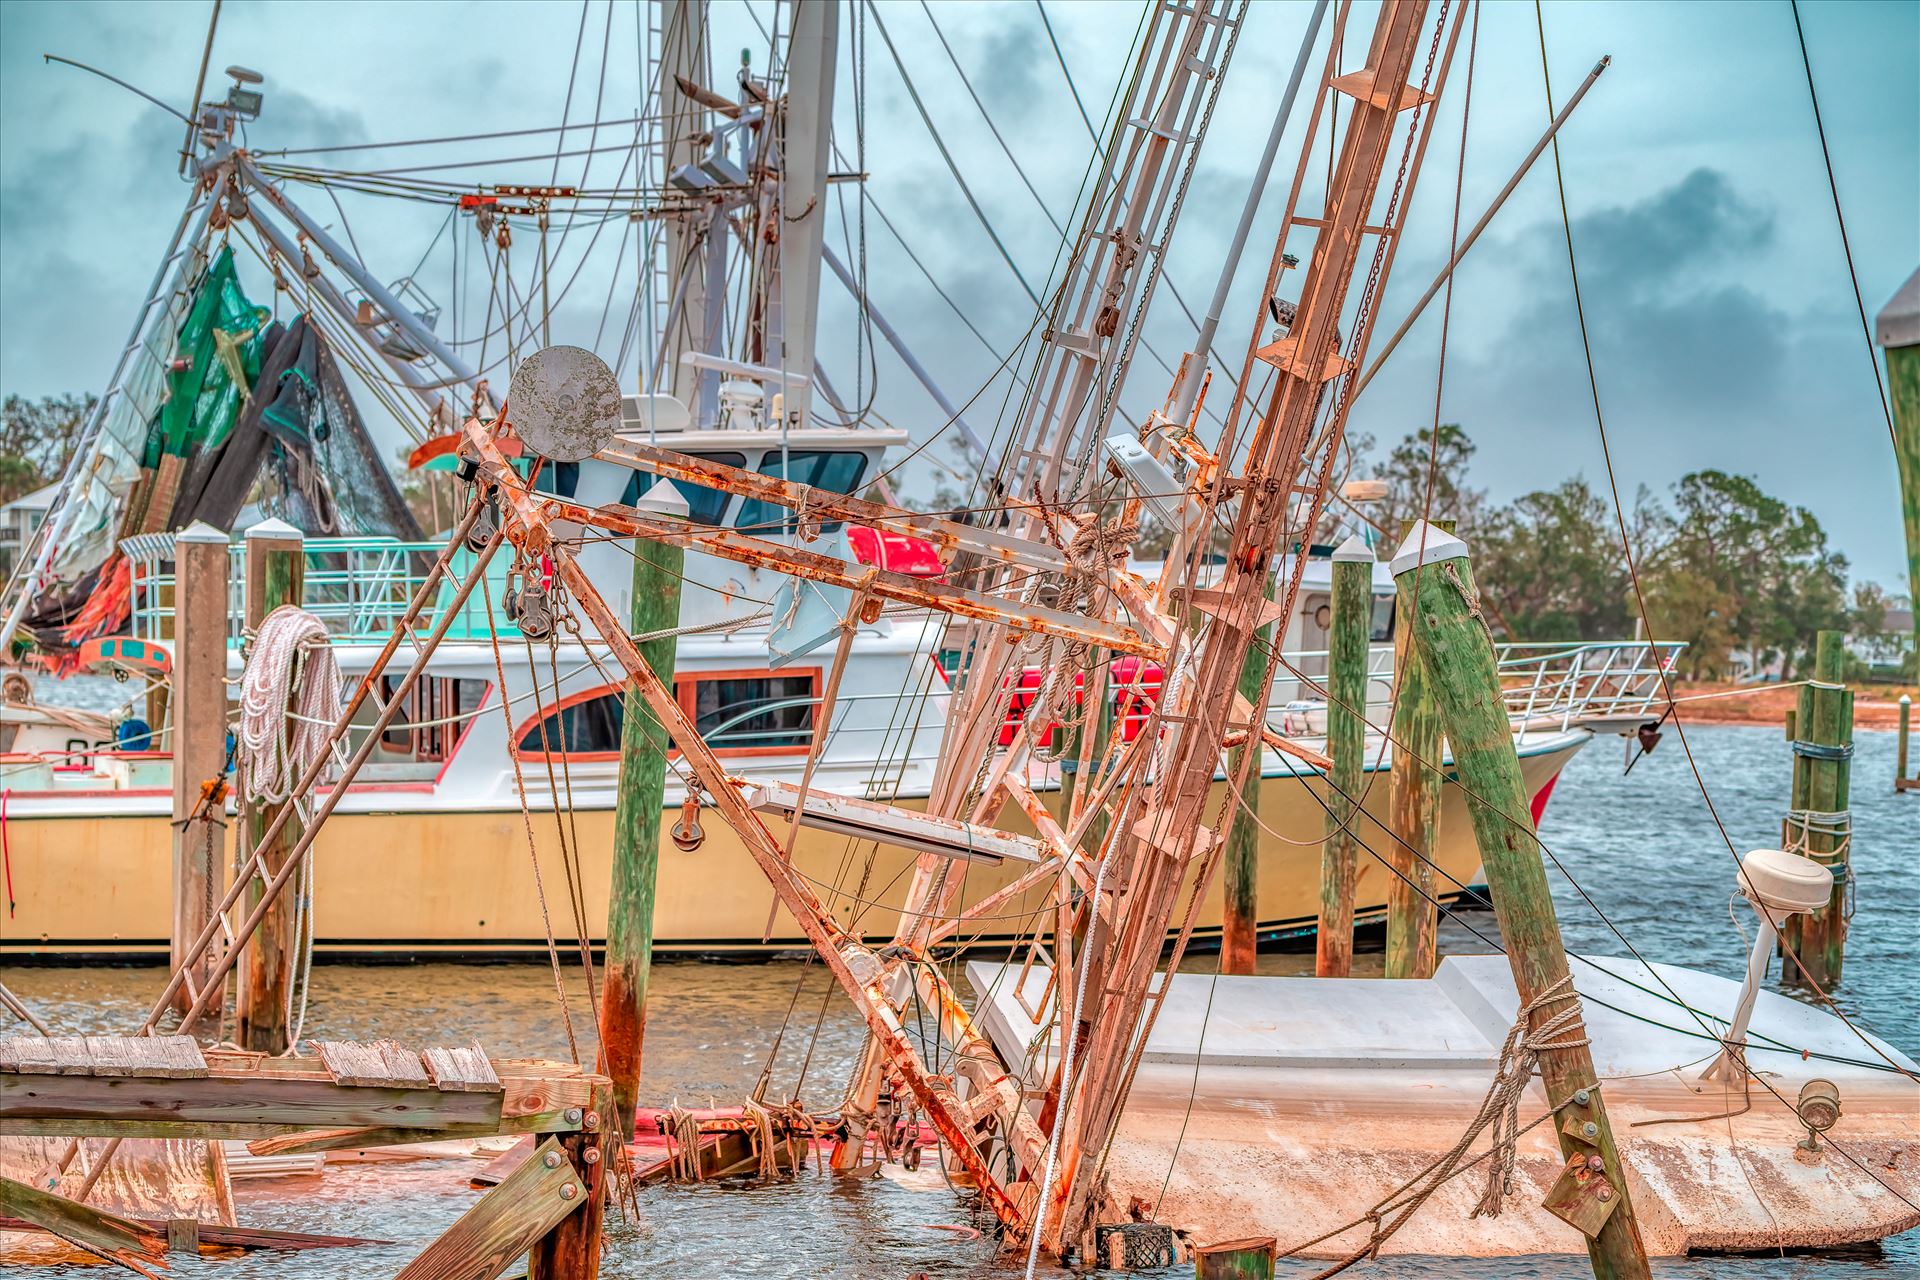 Hurricane Michael - shrimpboat sunk, dock damaged by Terry Kelly Photography